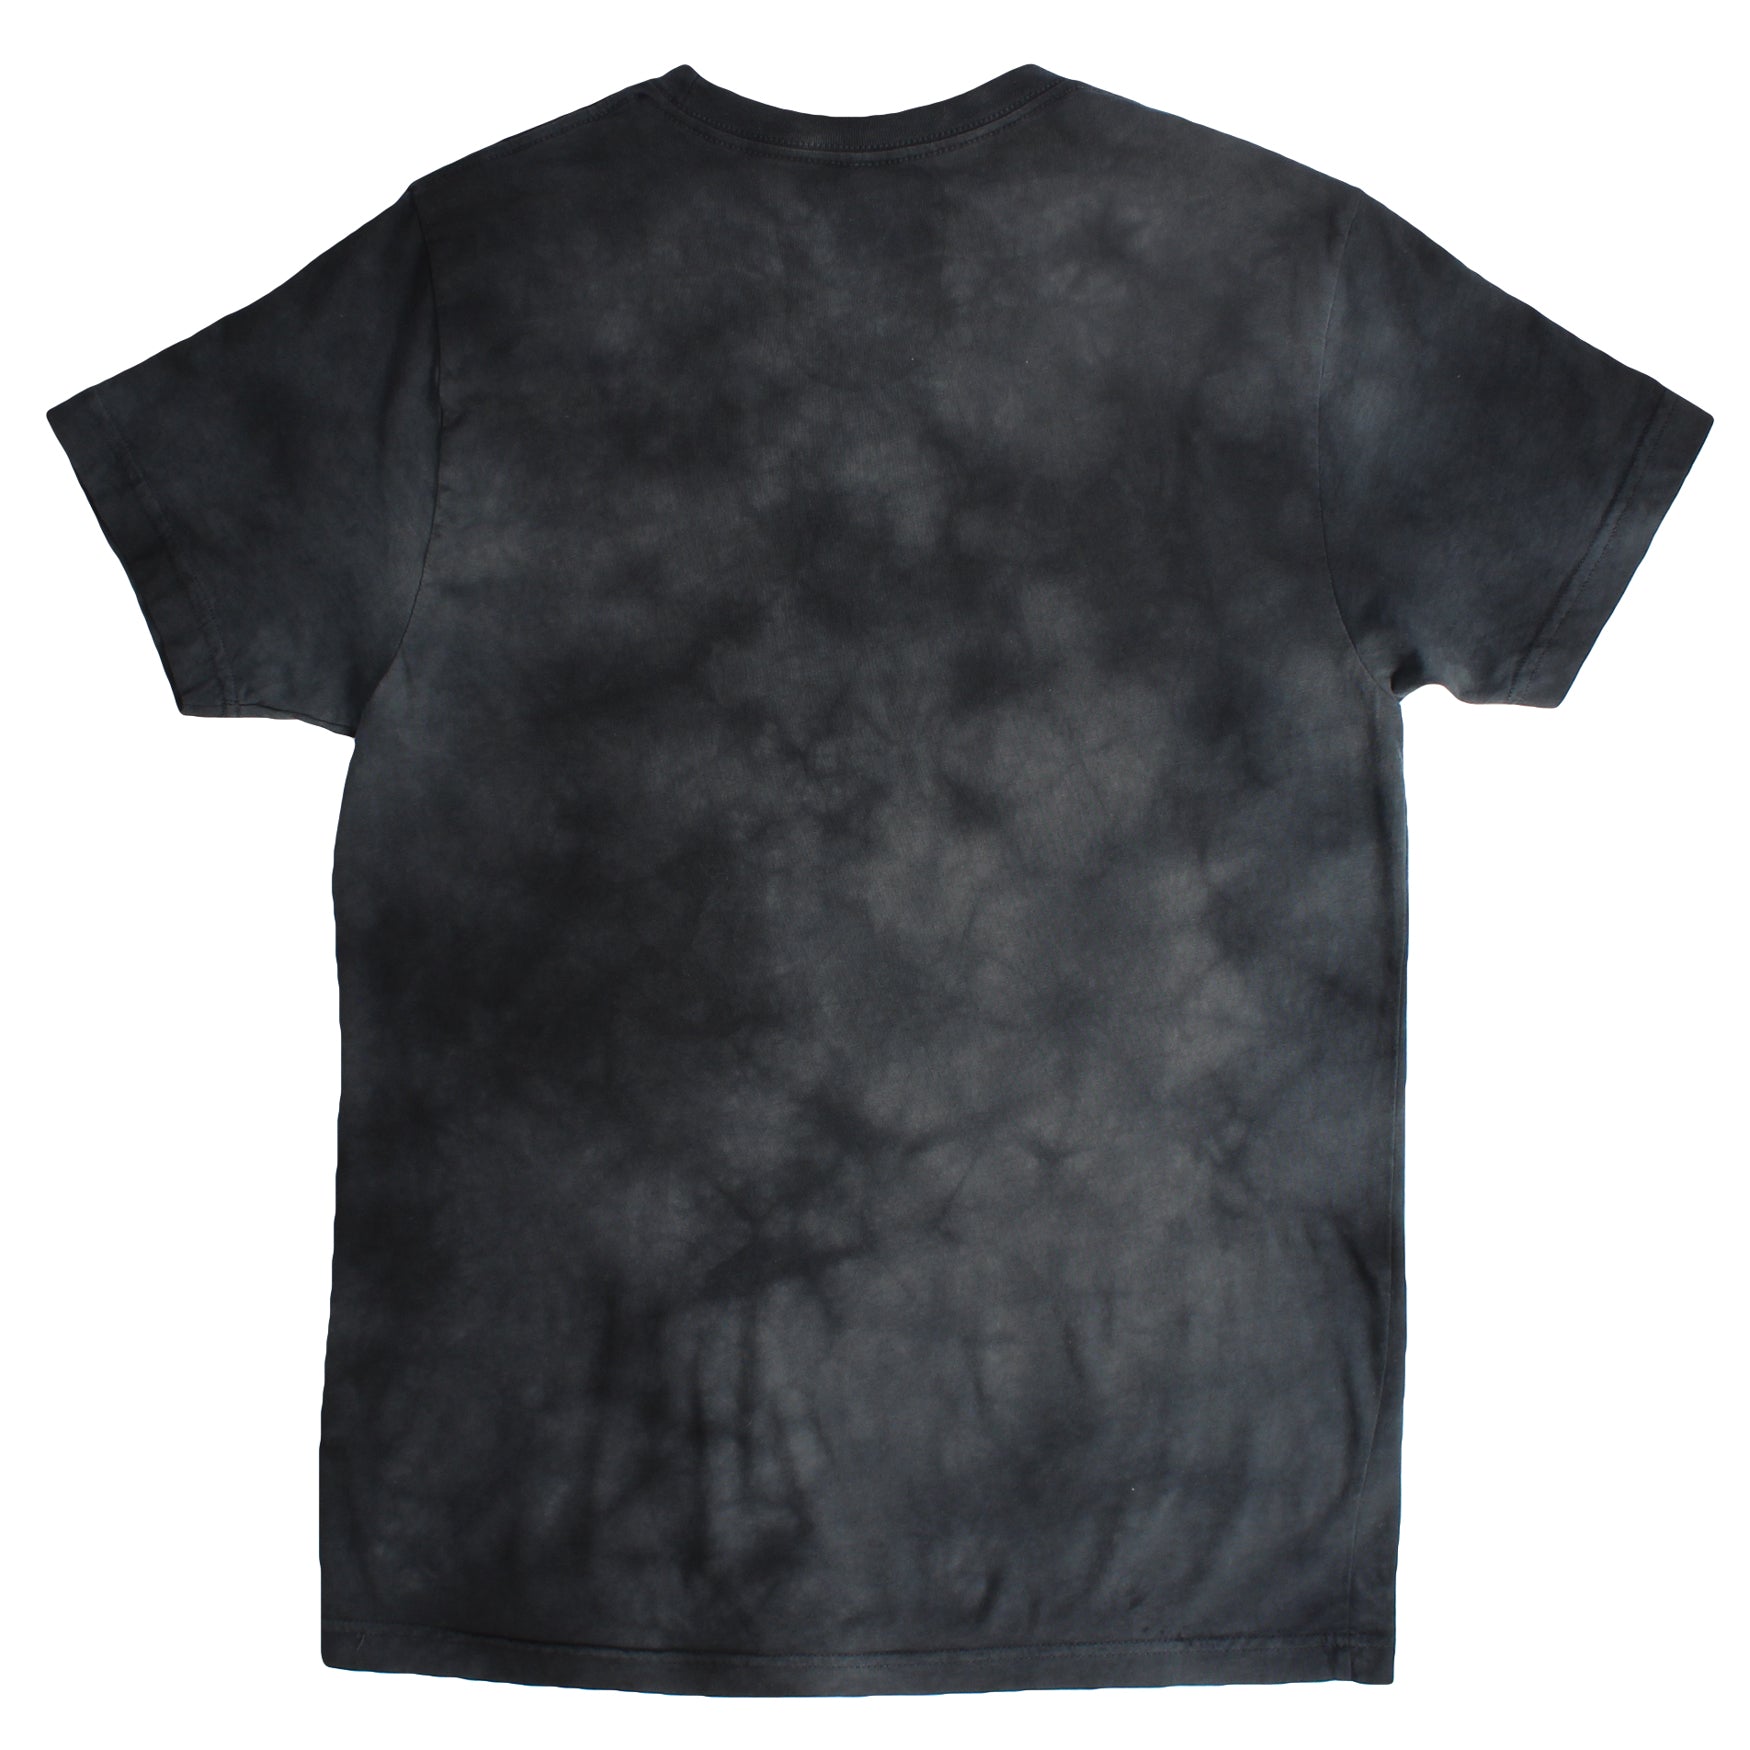 Buy Wild Side black cloud wash T-shirt by Altru Apparel | Altru Apparel